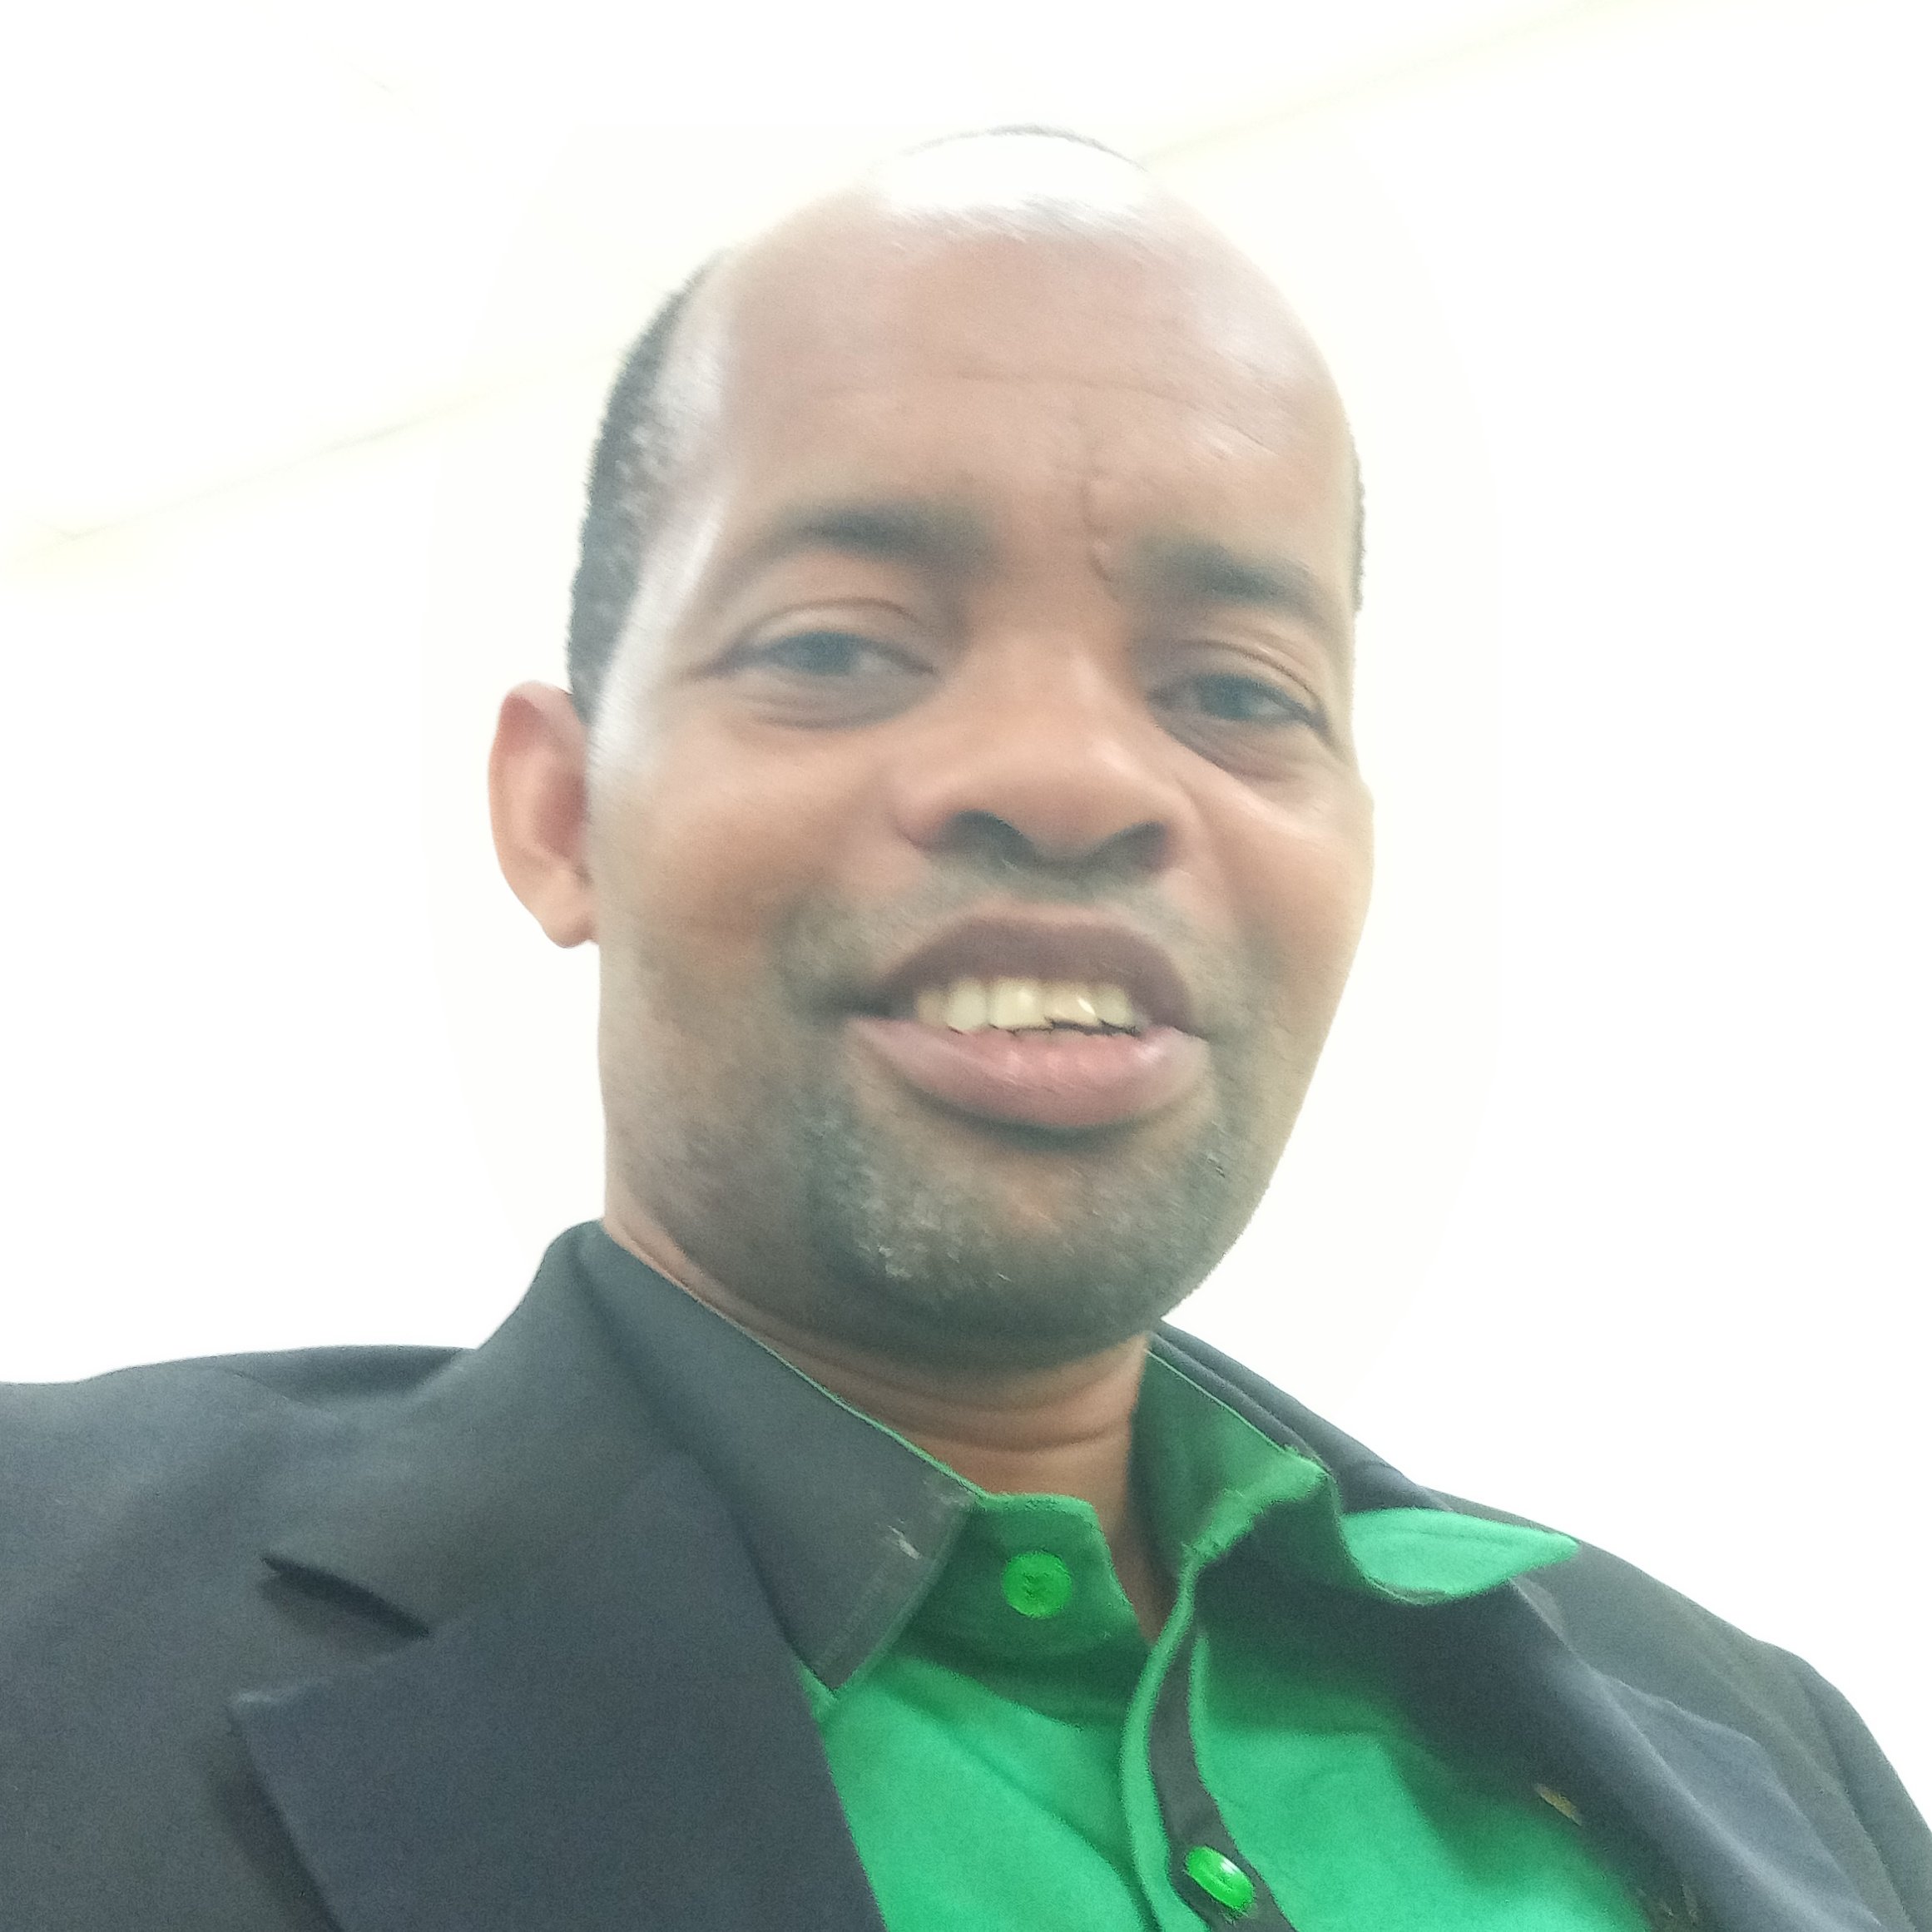  A Tanzanian man wearing a green shrit.